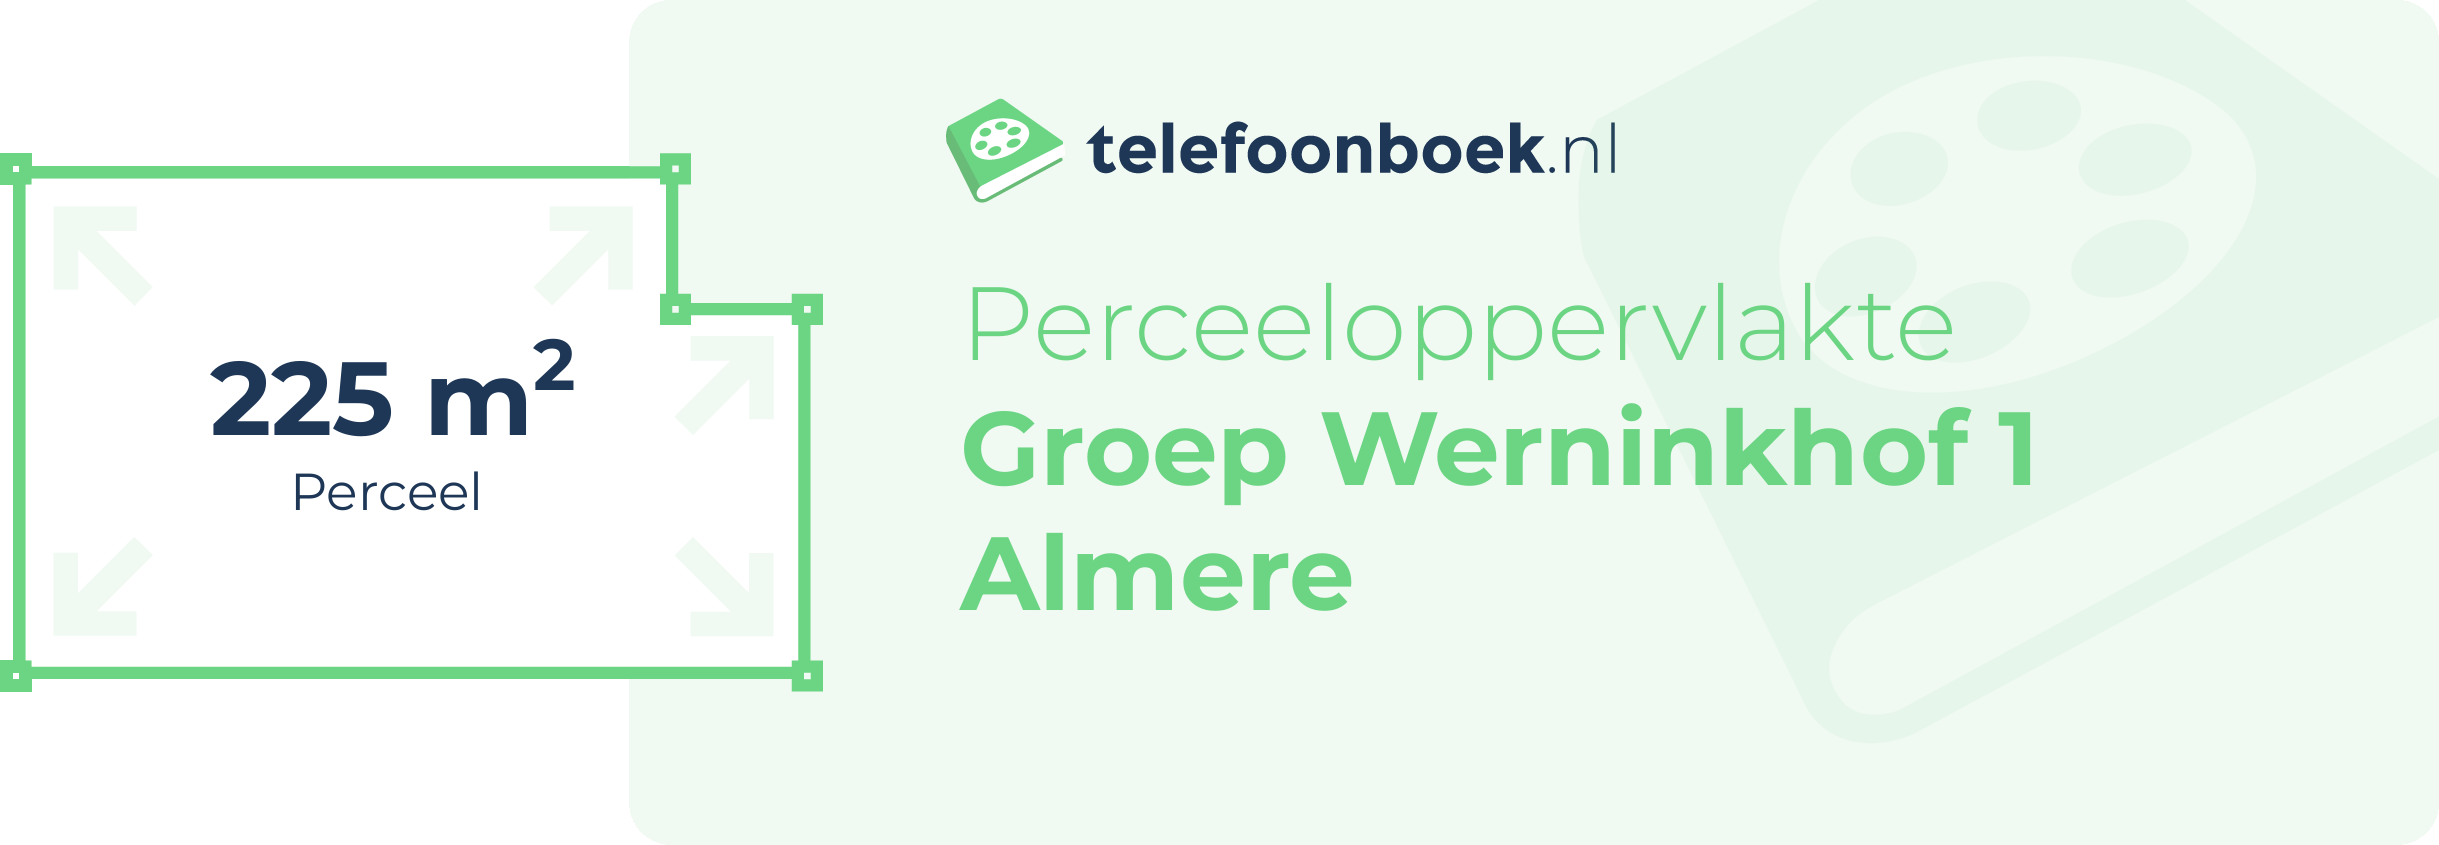 Perceeloppervlakte Groep Werninkhof 1 Almere